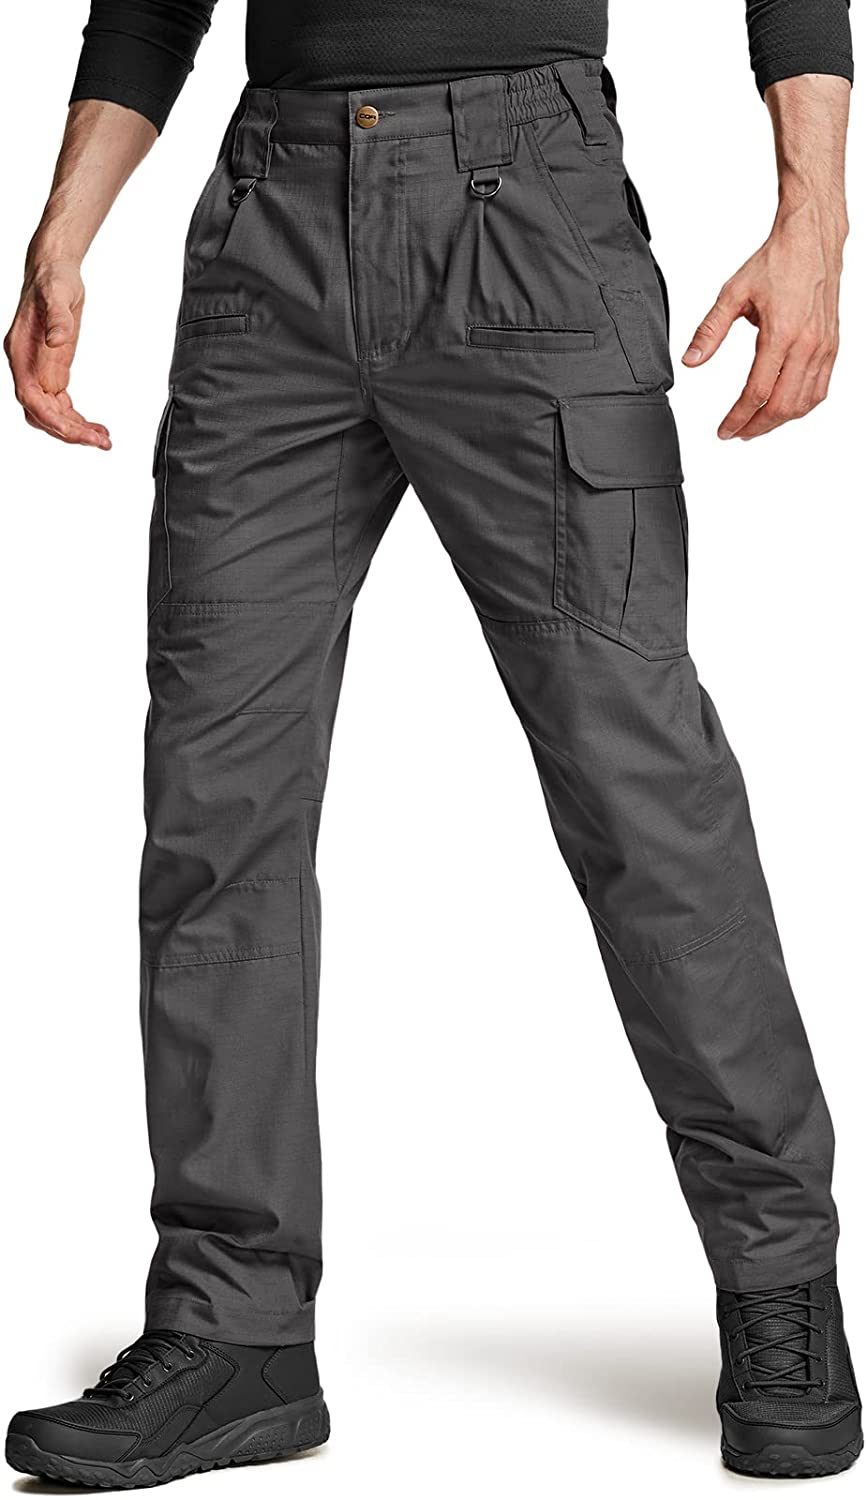 Water Resistant Ripstop Cargo Pants Outdoor Apparel CQR Men's Tactical Pants Lightweight EDC Hiking Work Pants 